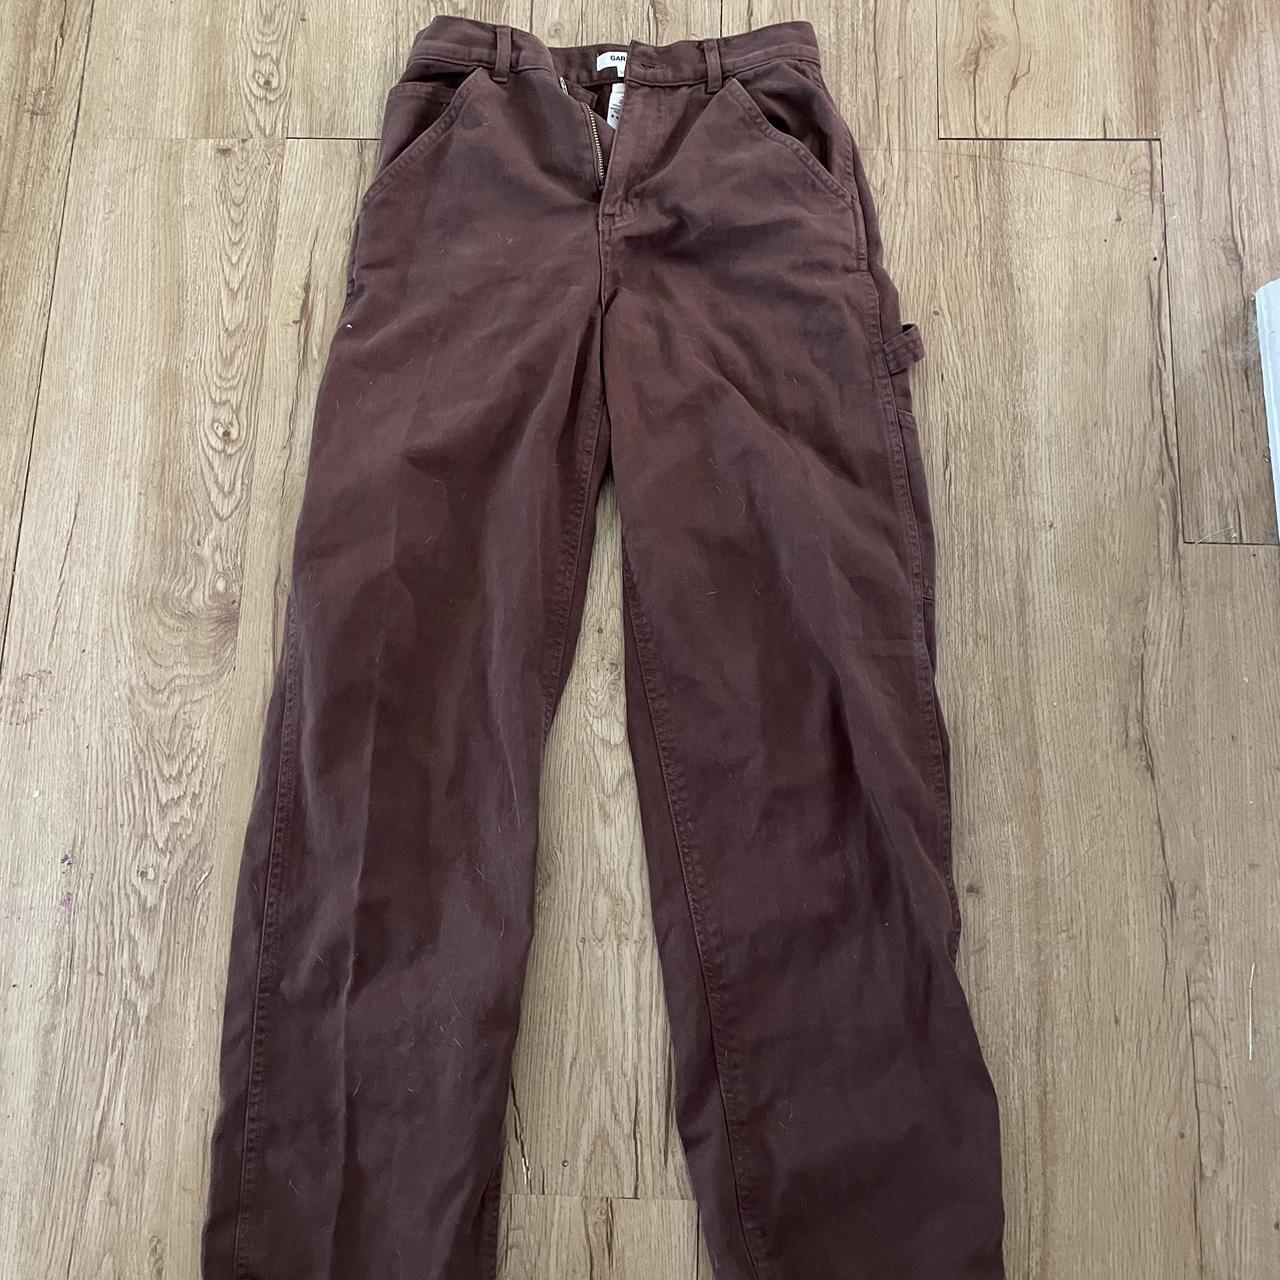 brown carpenter pants from garage in size 0. worn... - Depop